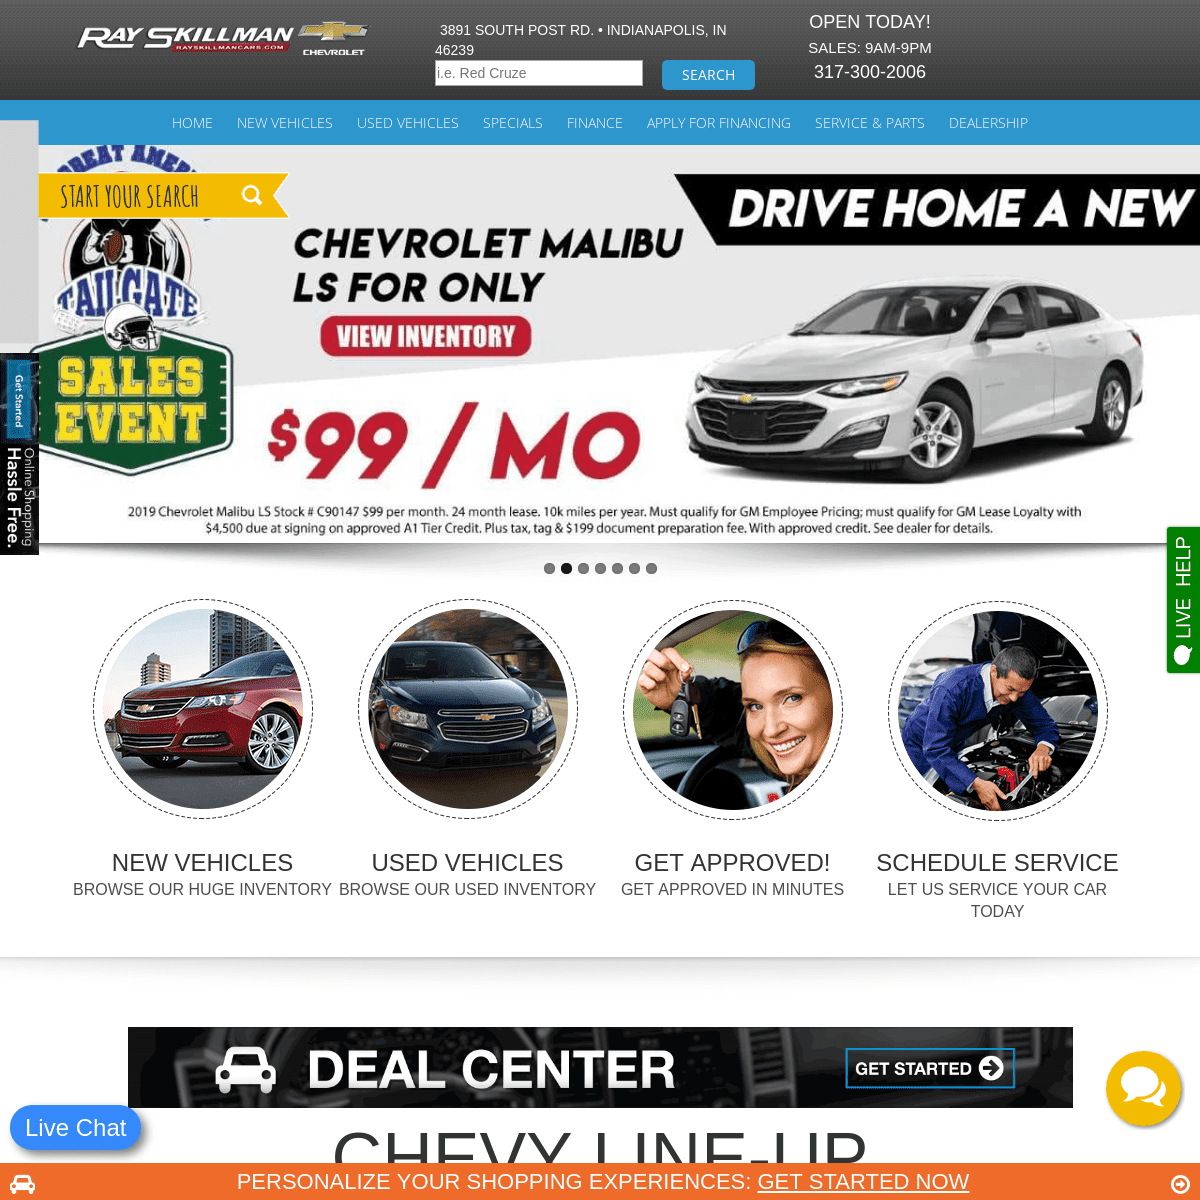 Ray Skillman Discount Chevrolet | Indianapolis, Indiana